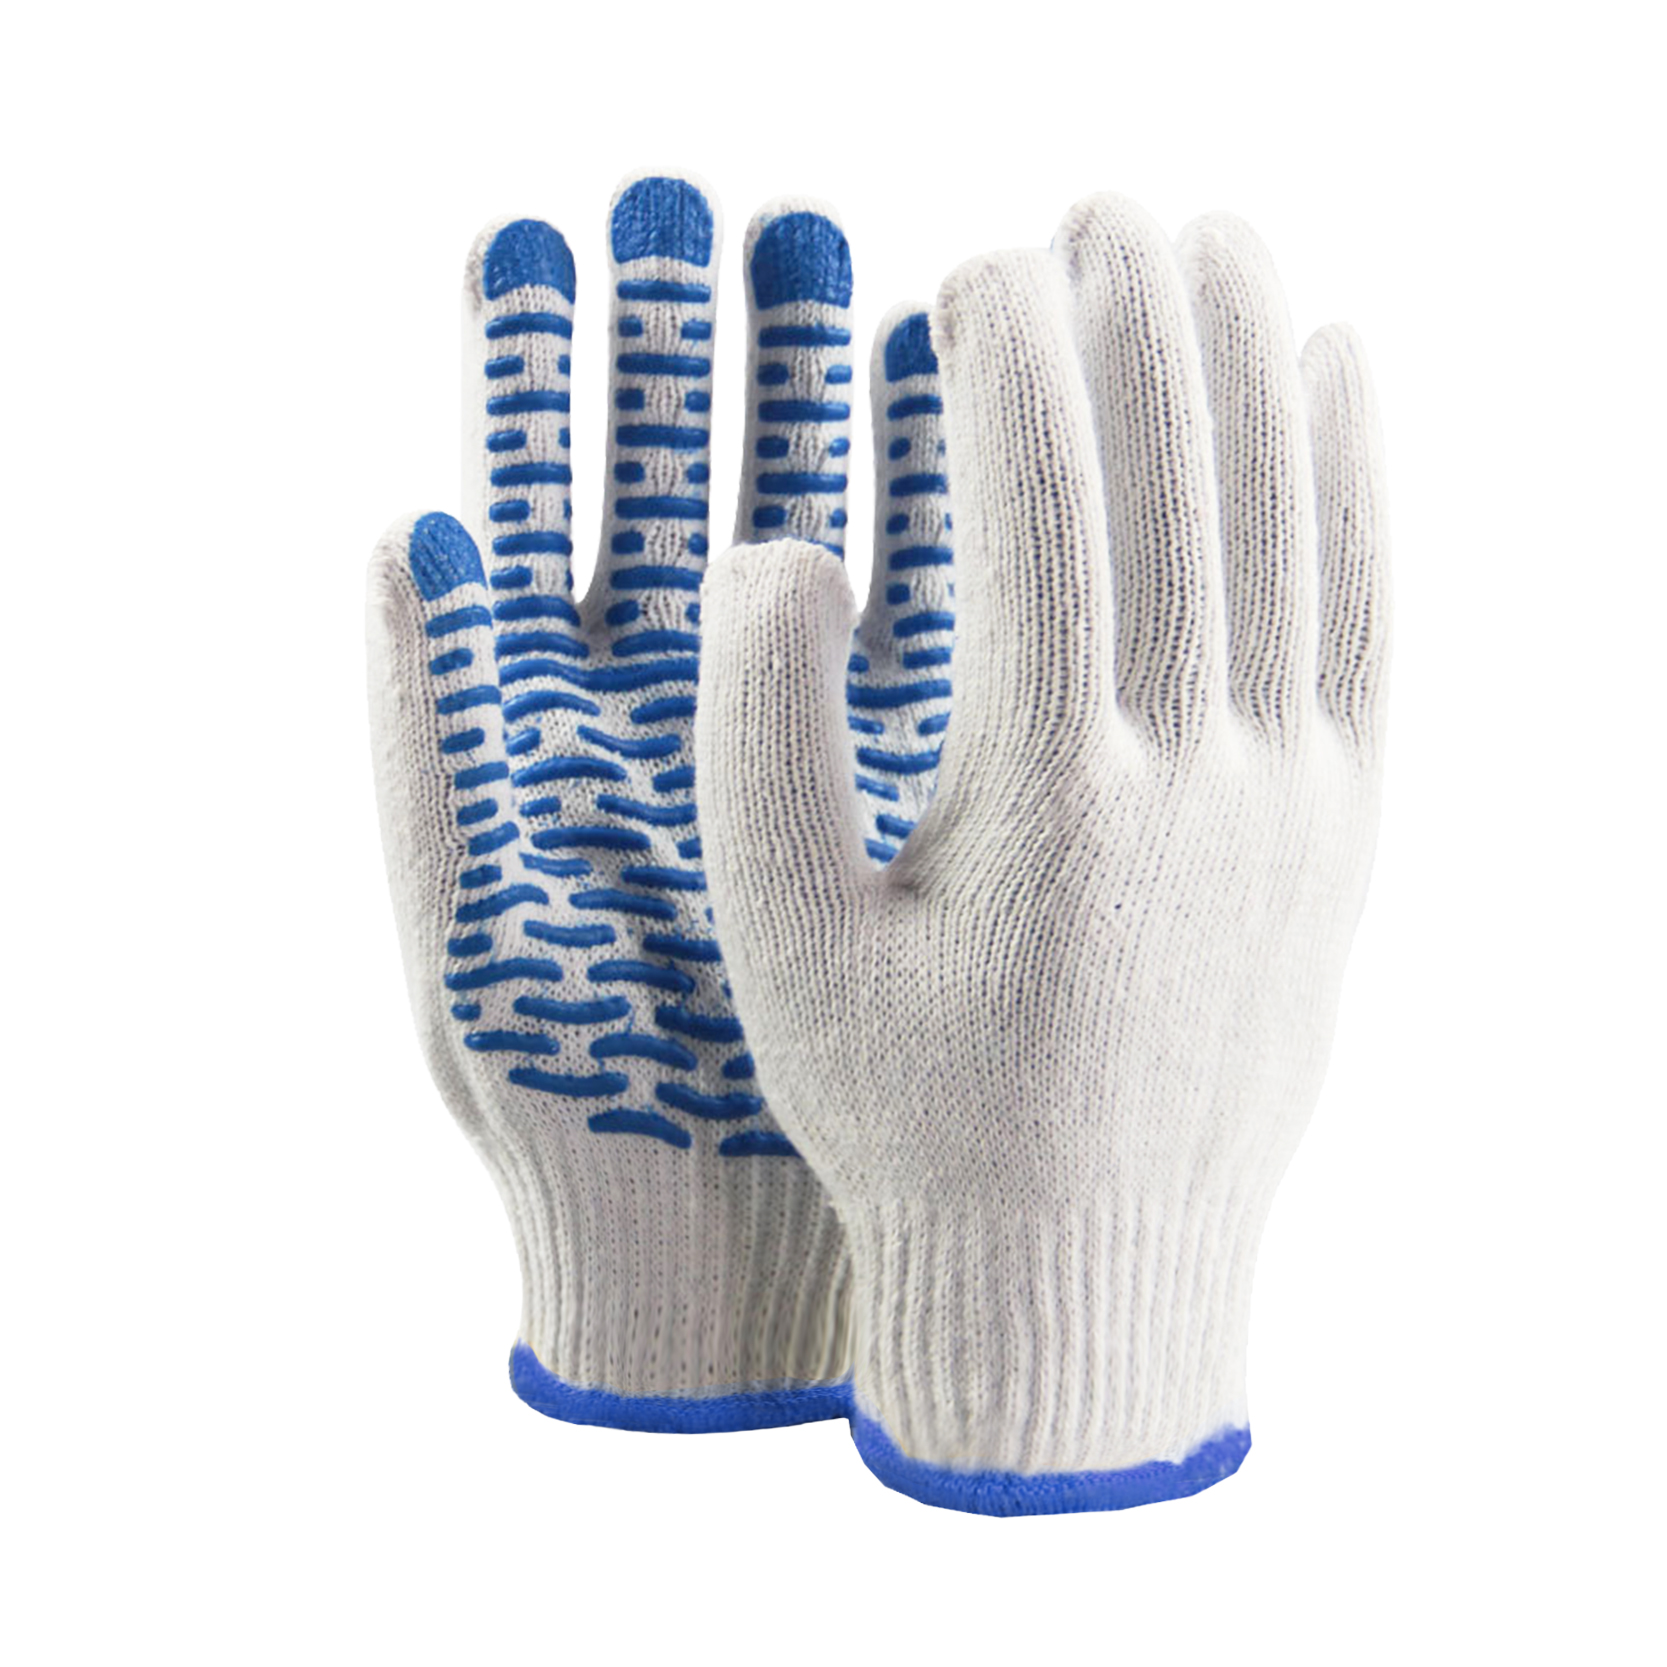 Pvc Dotted Natural White Cotton Glove Cotton String Knit Glove (၂)ခု၊